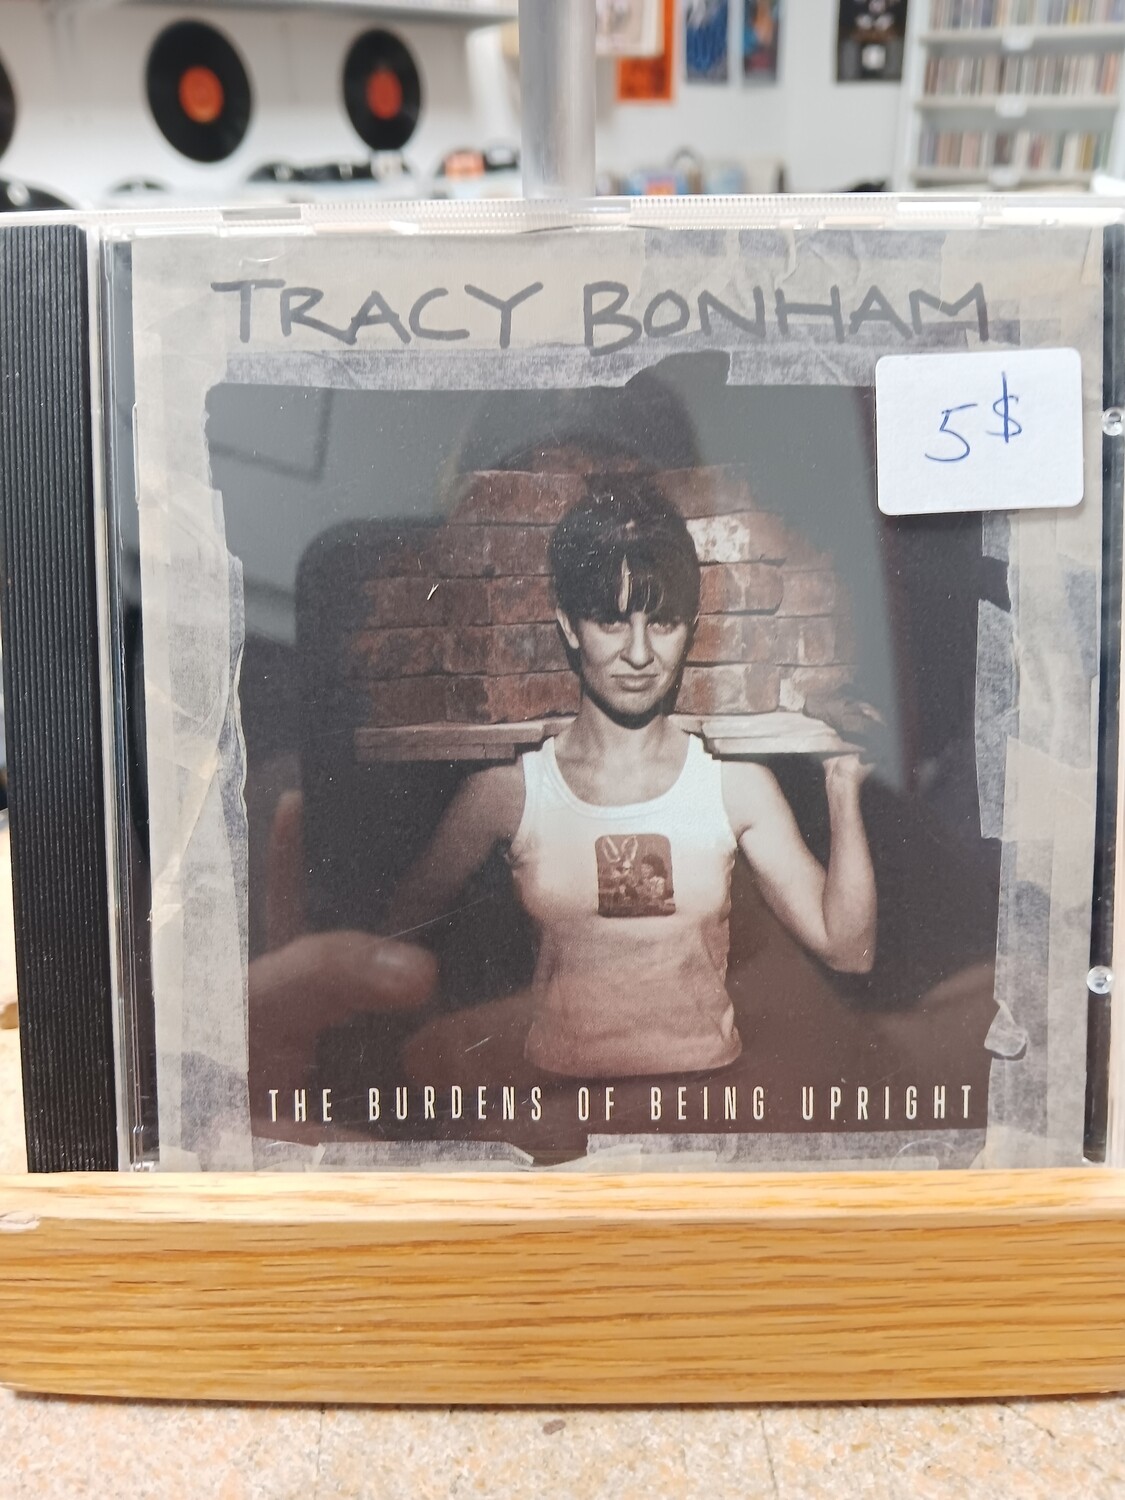 Tracy Bonham - The burdens of being upright (CD)